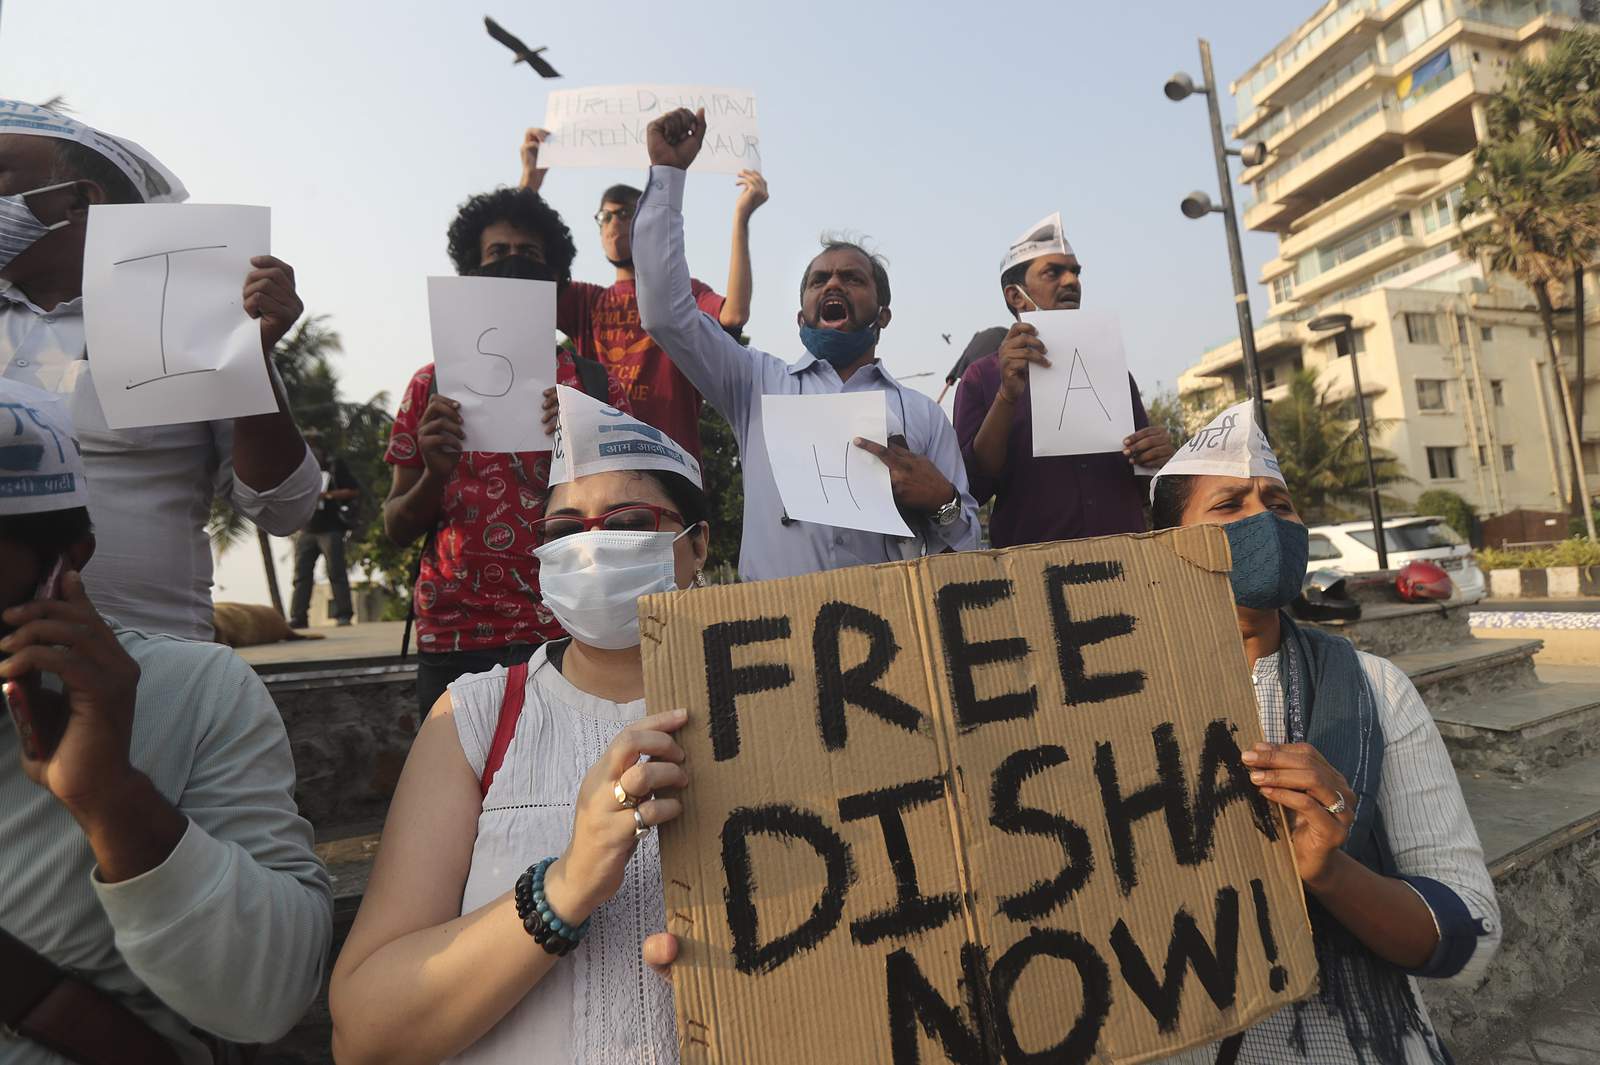 Scores protest in India against arrest of climate activist